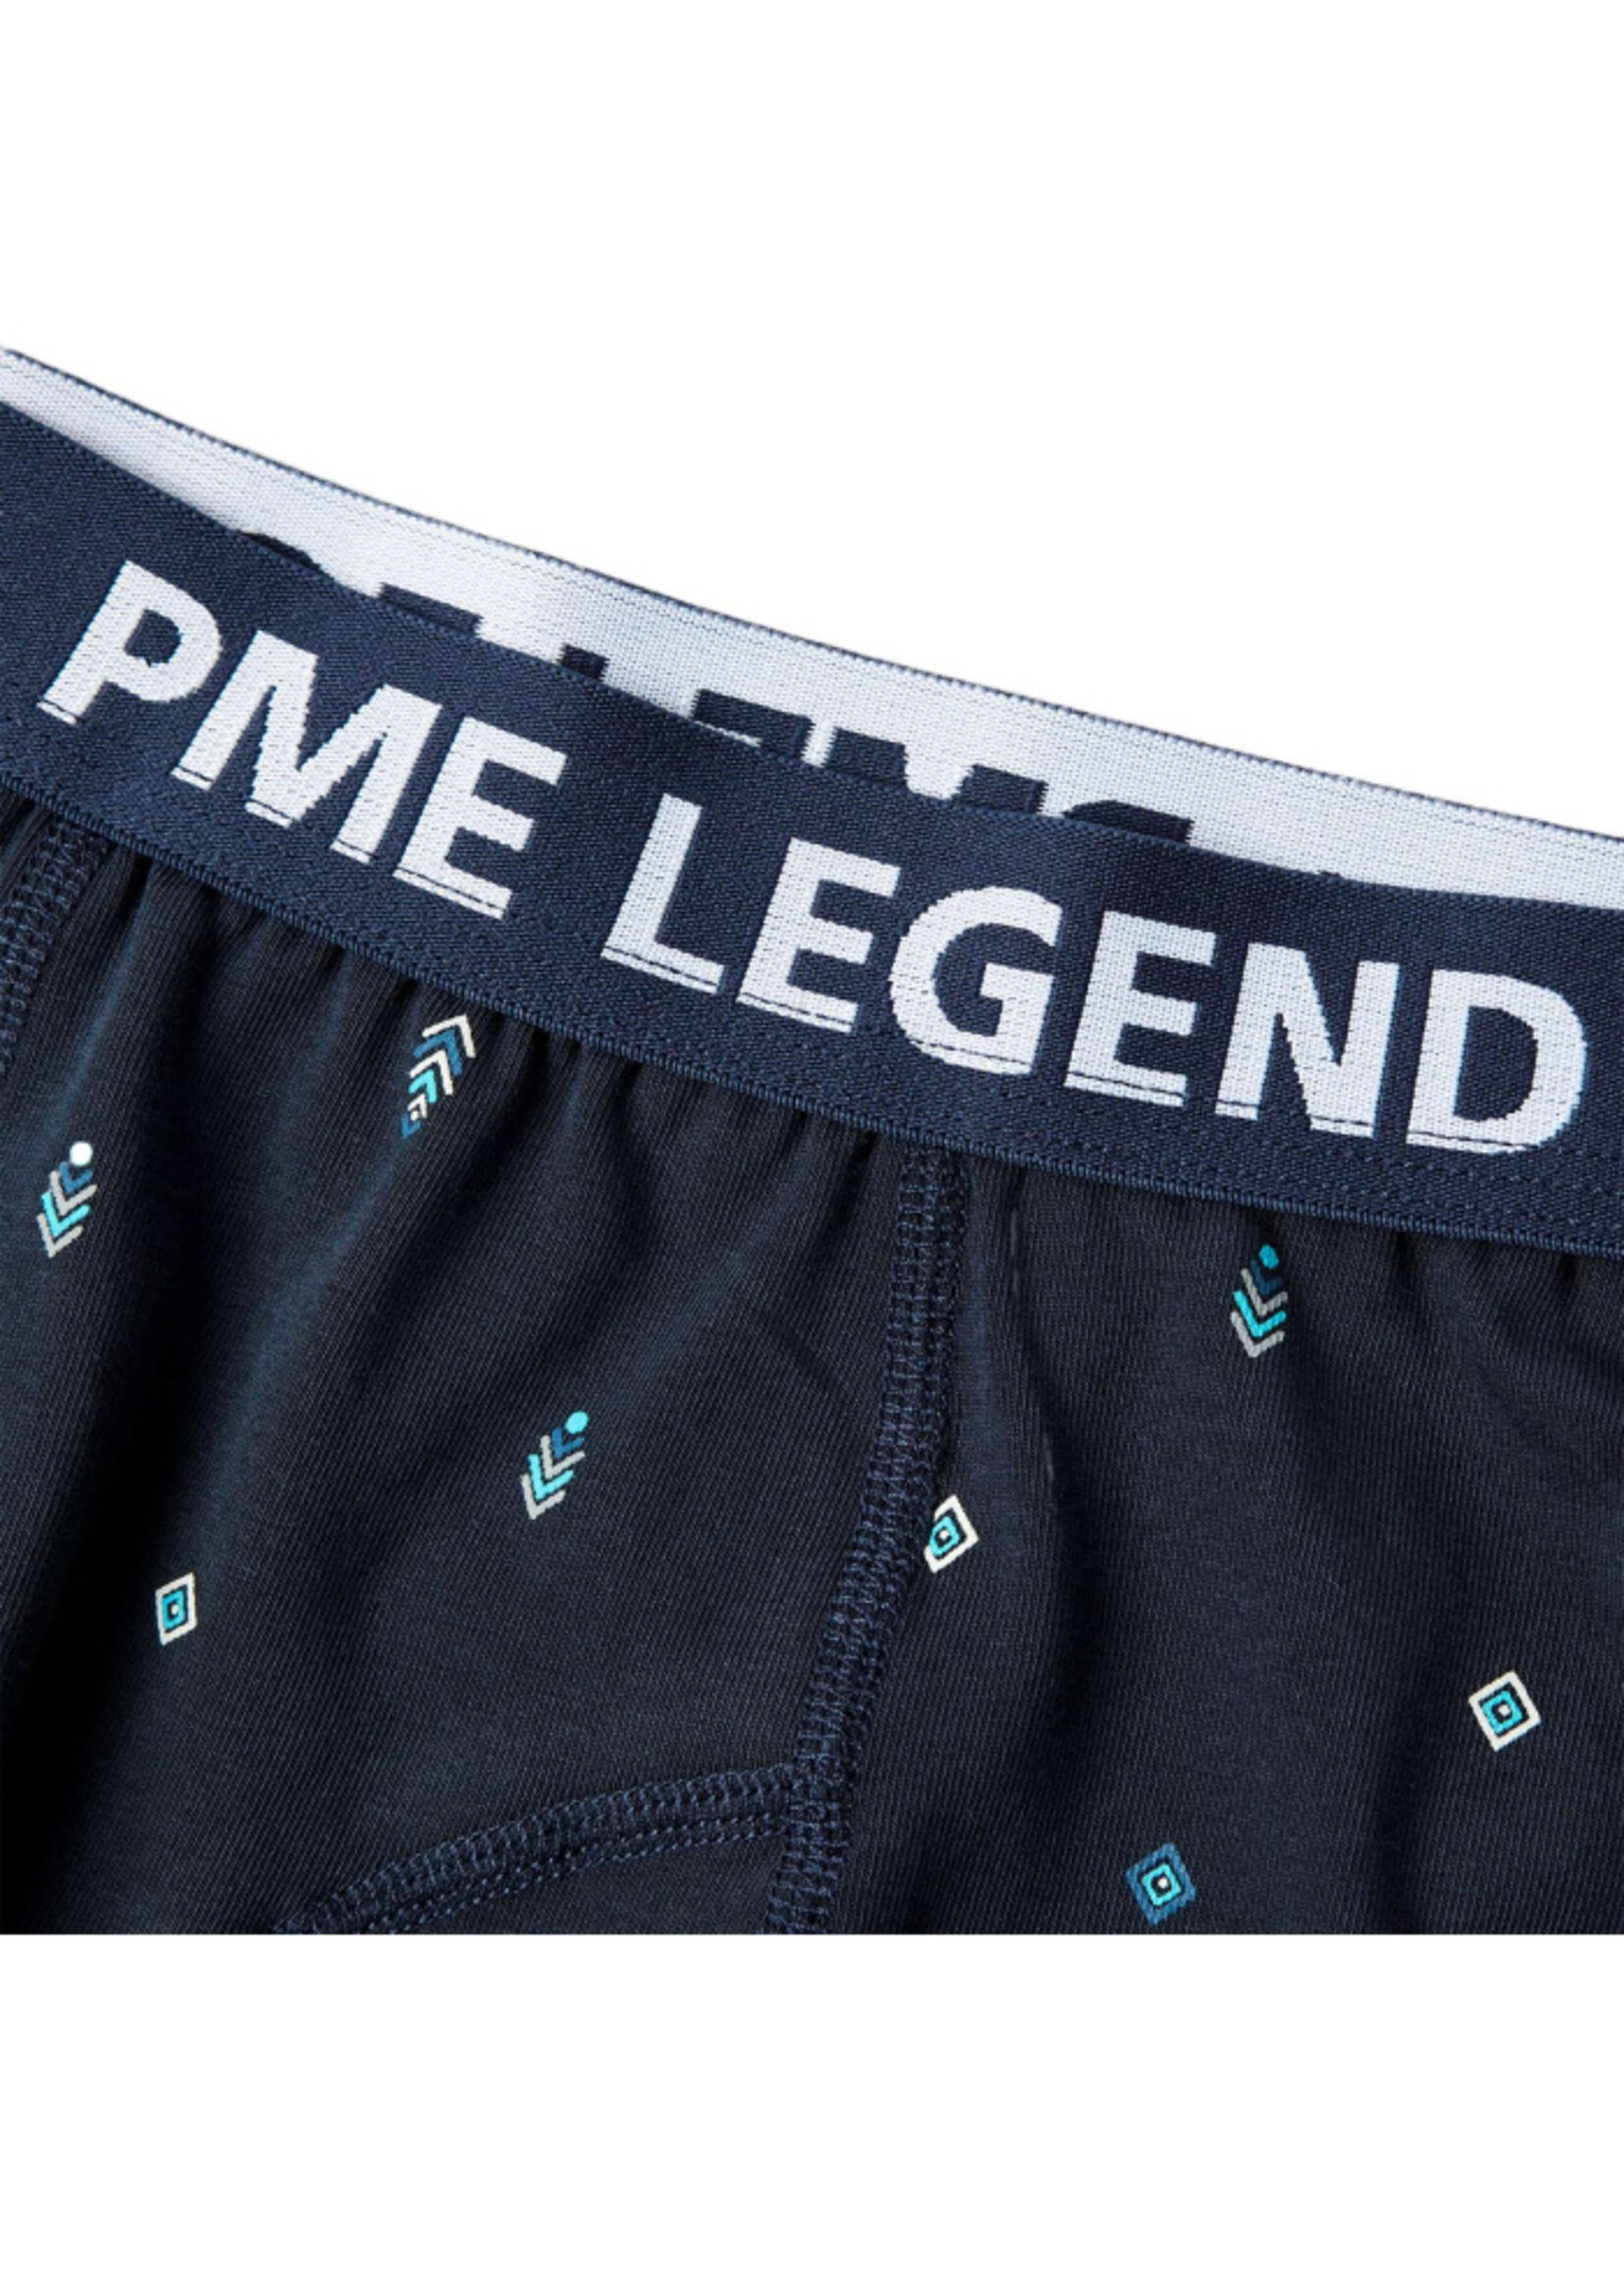 PME-Legend Boxershort  PUW2210930-5281